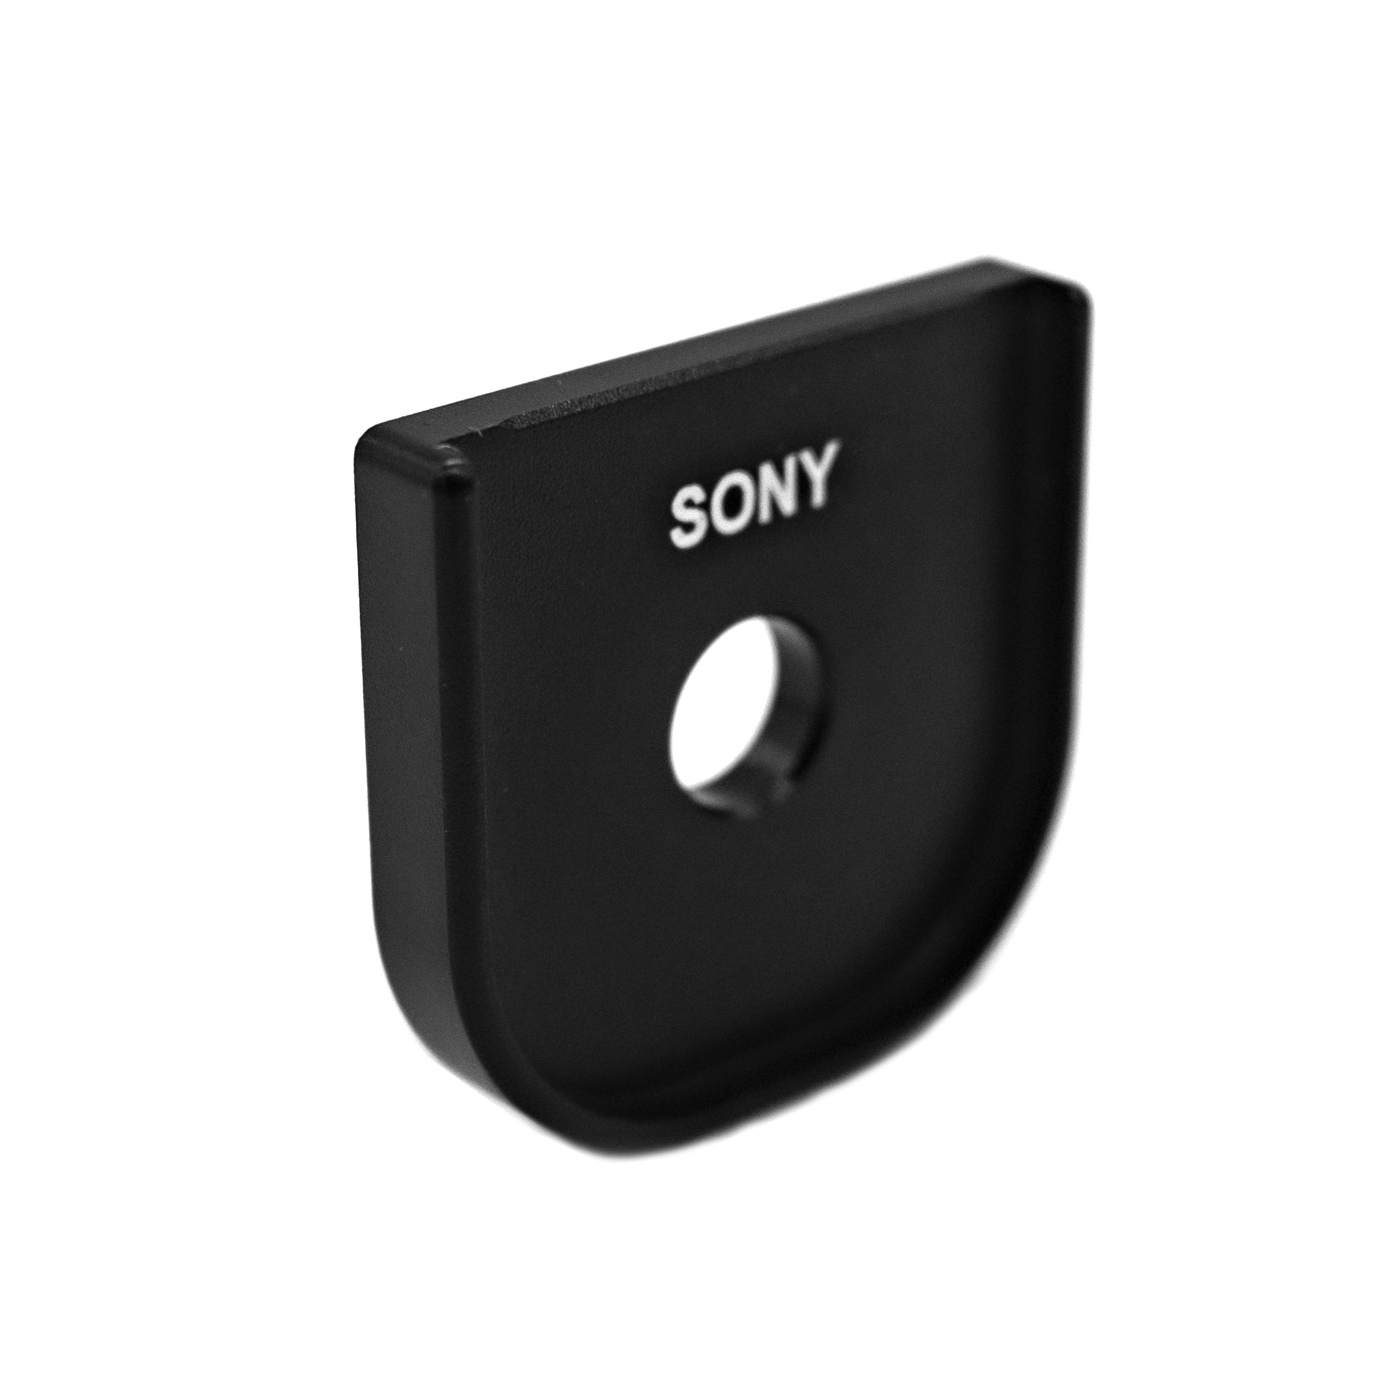 Sony 8T Anti Twist Cradle for Mini Quick Release Plates